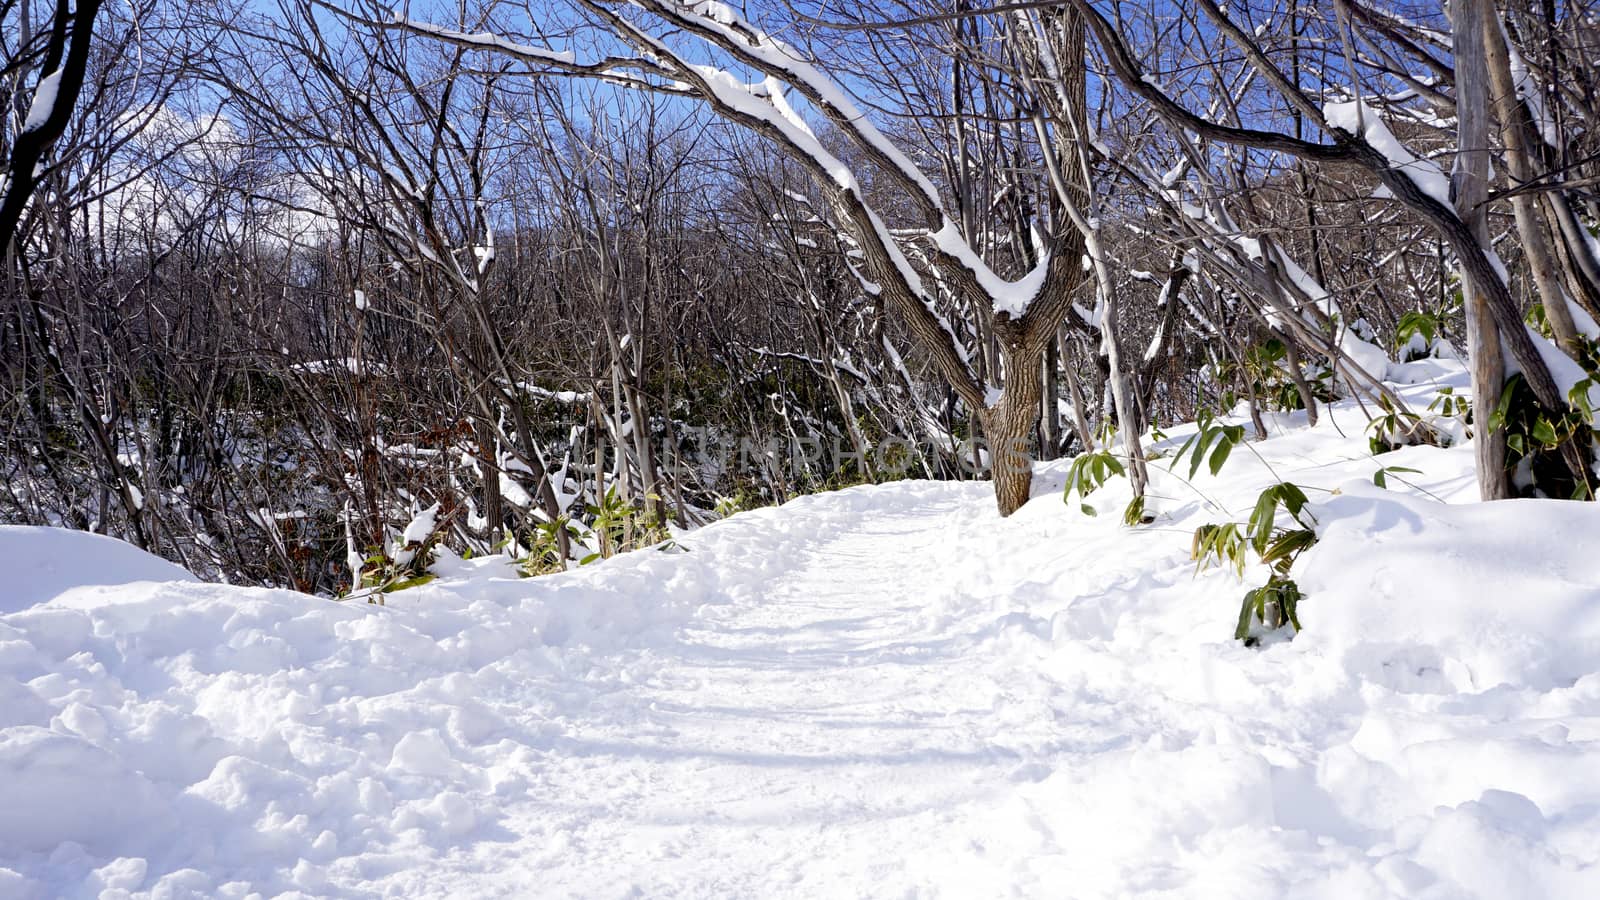 Snow and walkway in the forest Noboribetsu onsen snow winter par by polarbearstudio